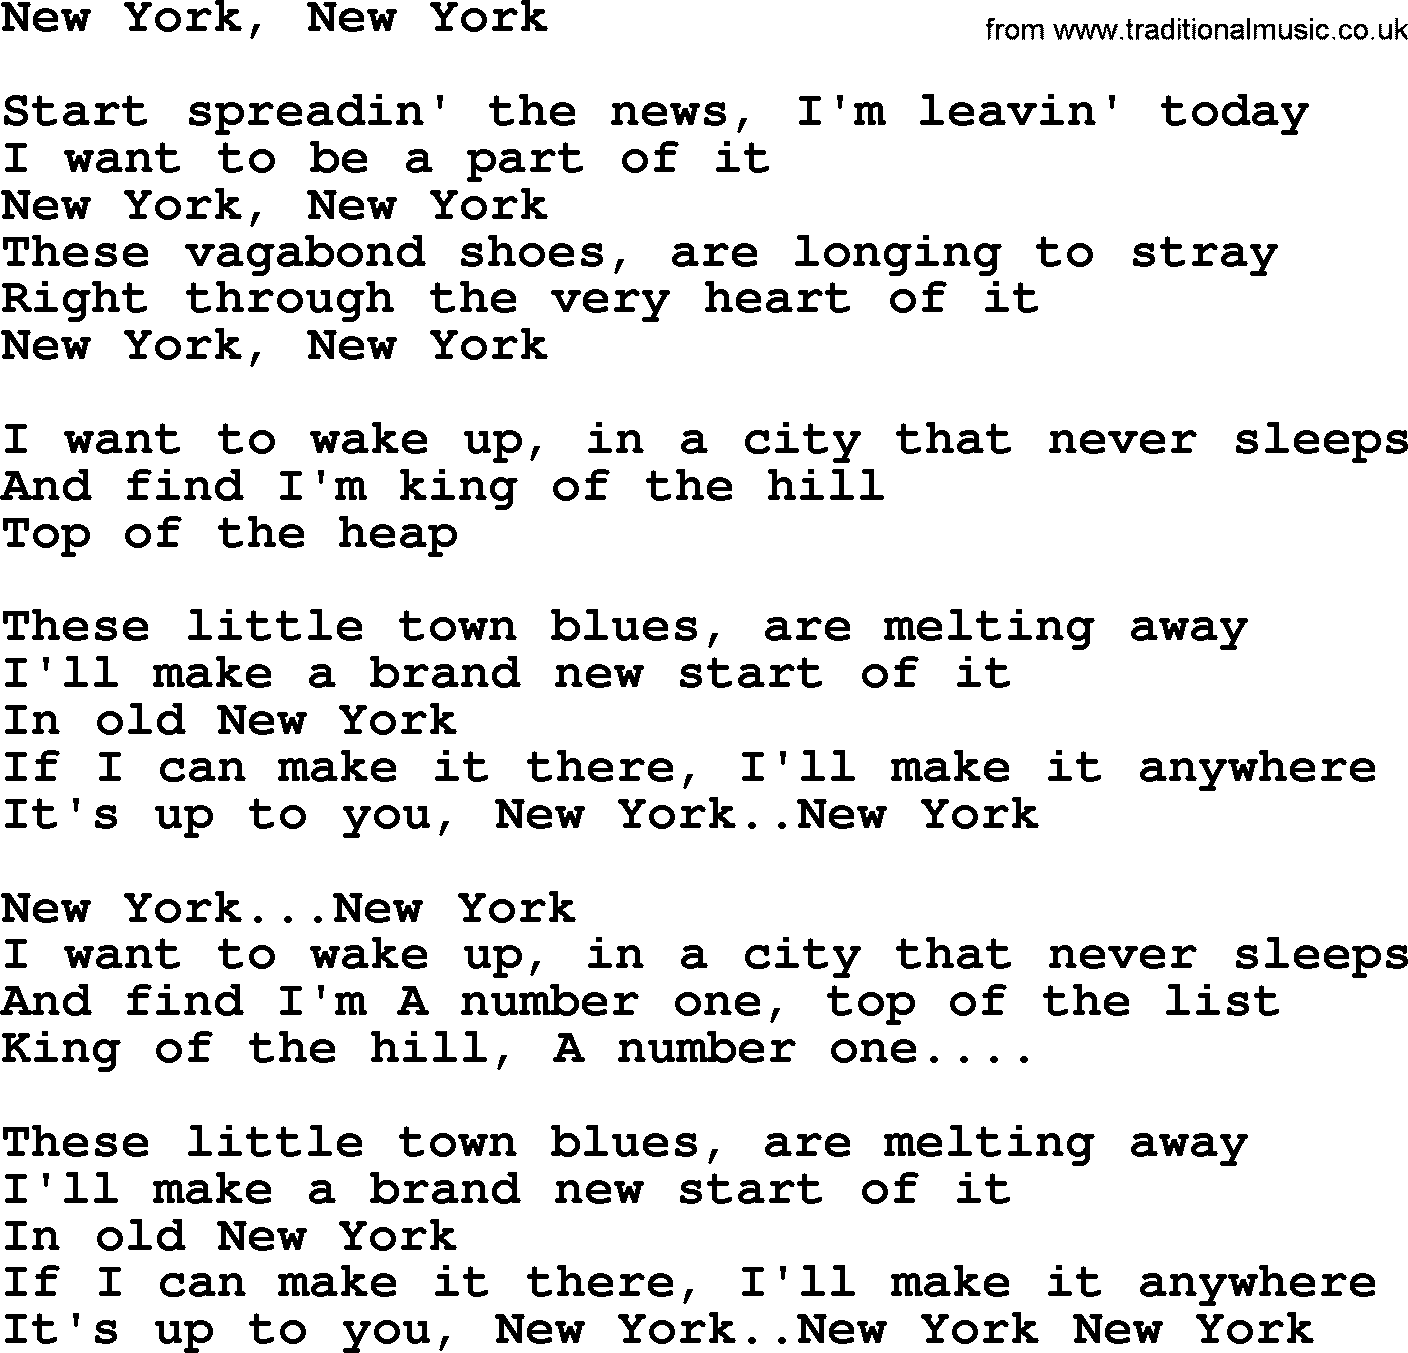 Bruce Springsteen song: New York, New York lyrics